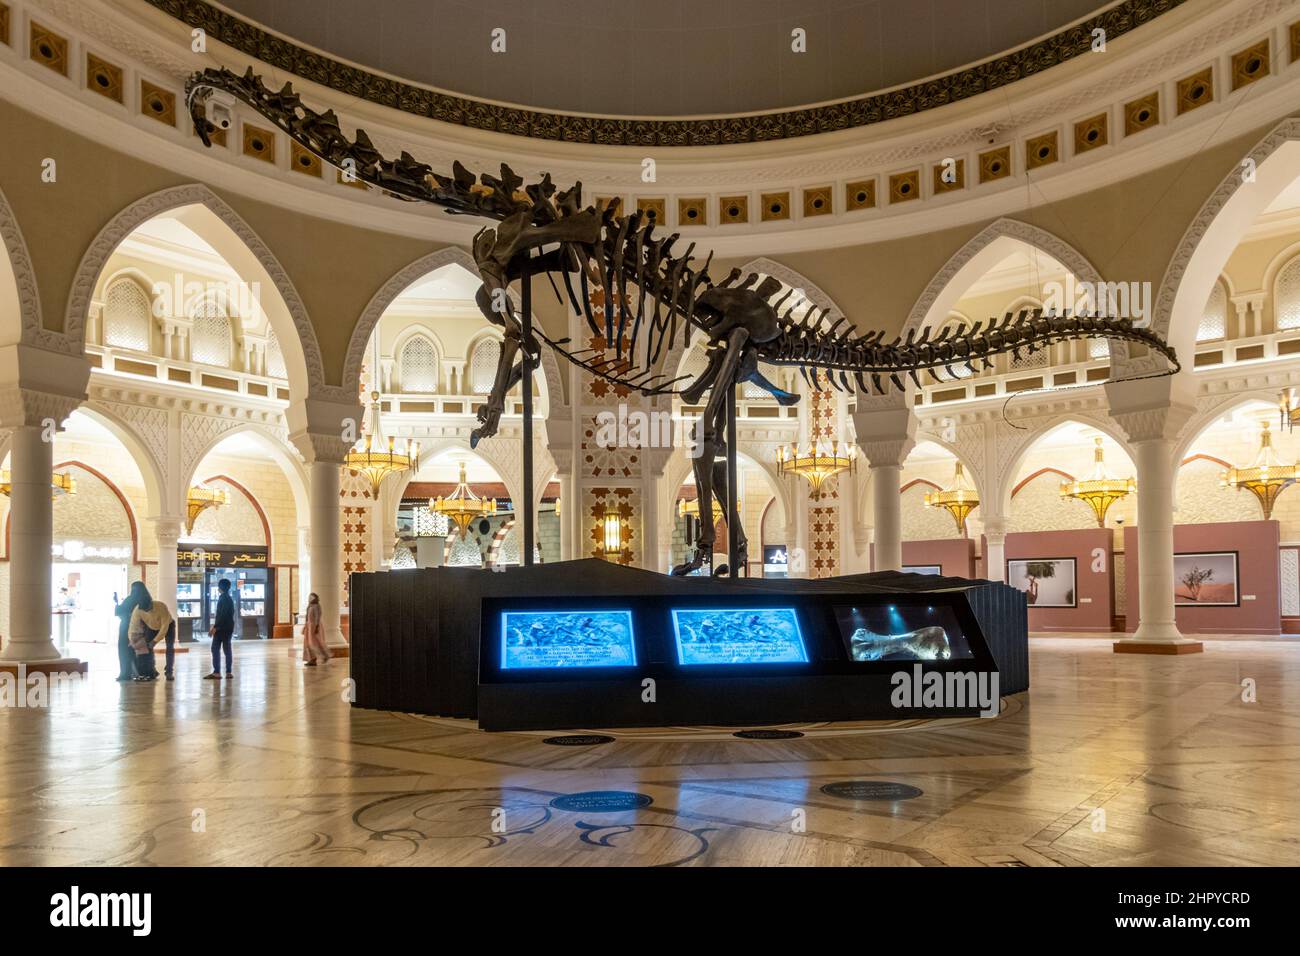 Dinosaur skeleton on display inside Middle Eastern styled The Souk shopping area inside the Dubai Mall, United Arab Emirates Stock Photo